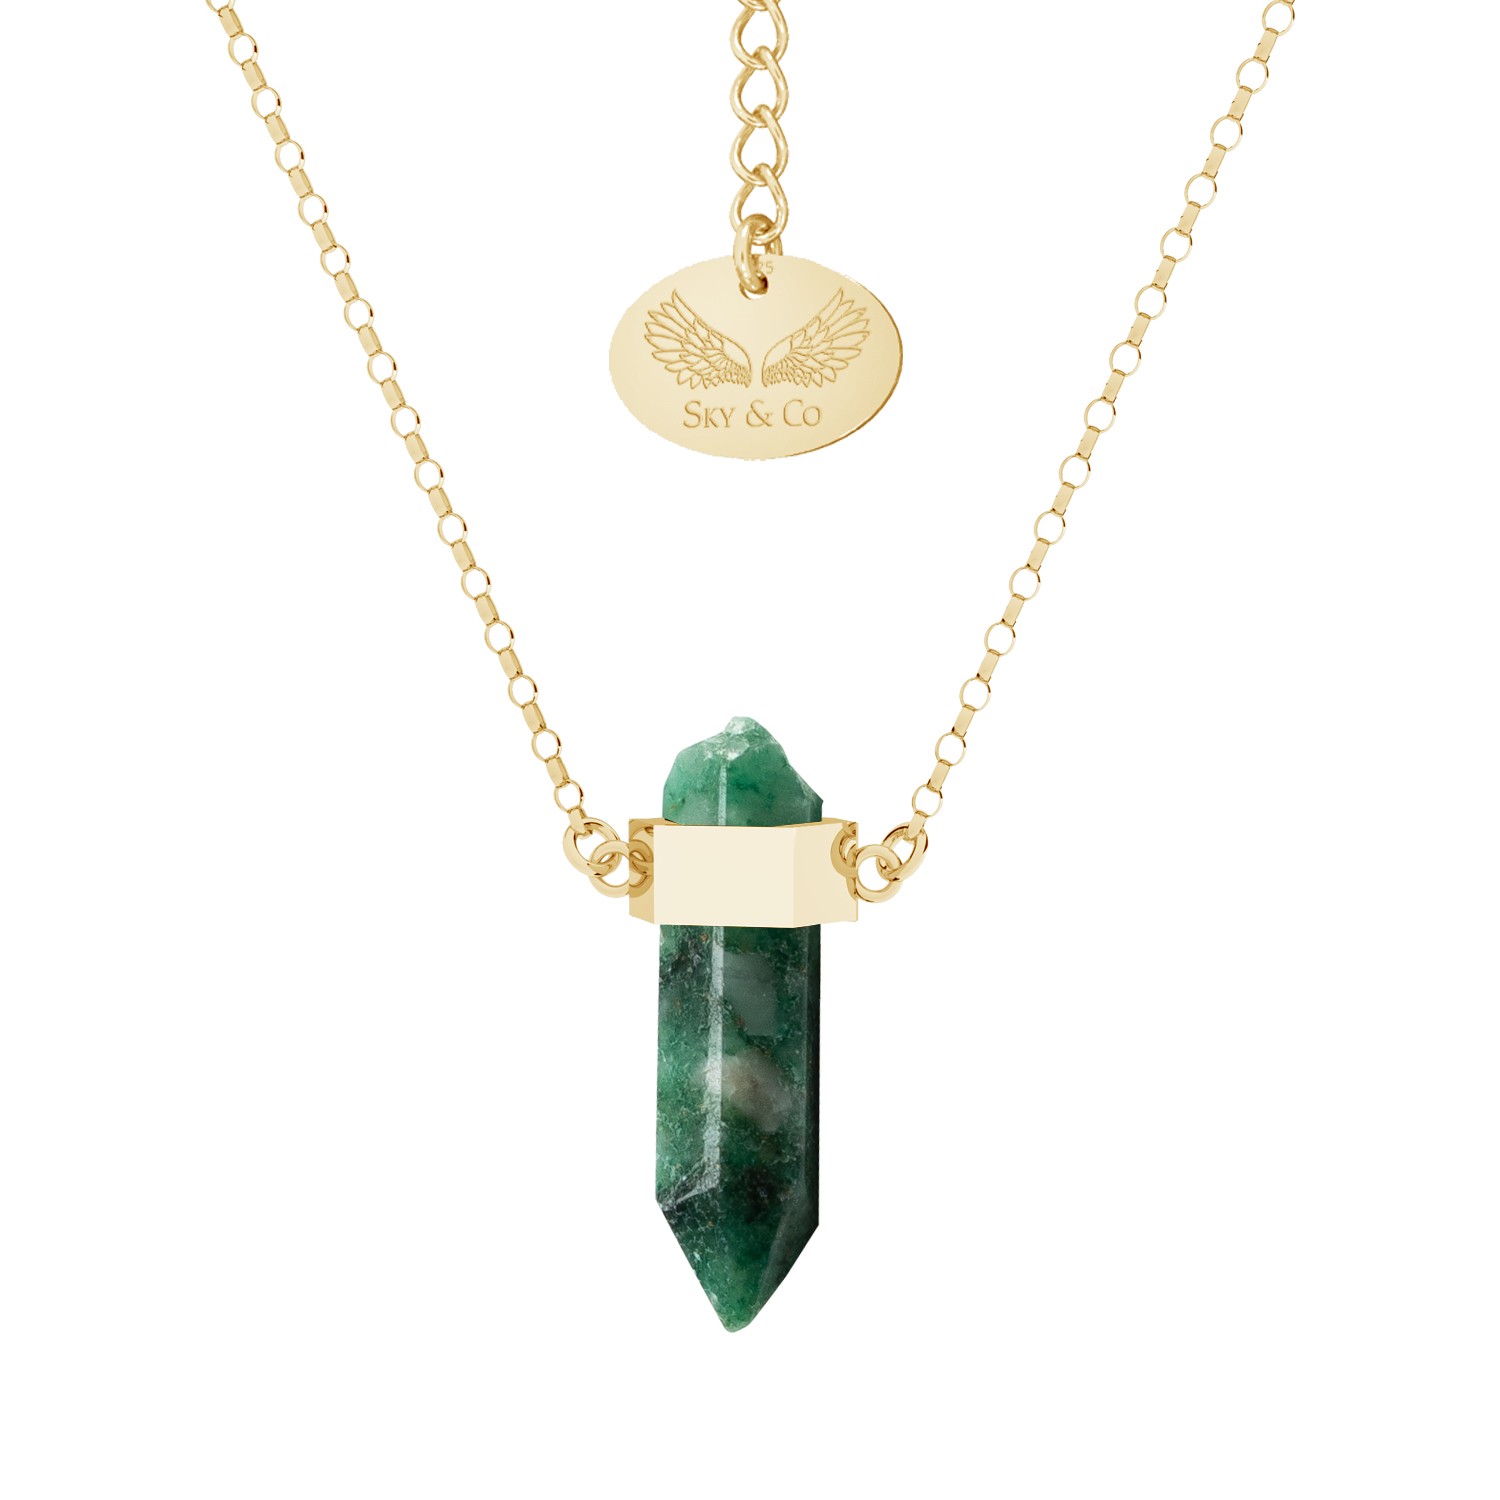 Ezoteriq necklace with mountain stone, Sky&Co, sterling silver 925